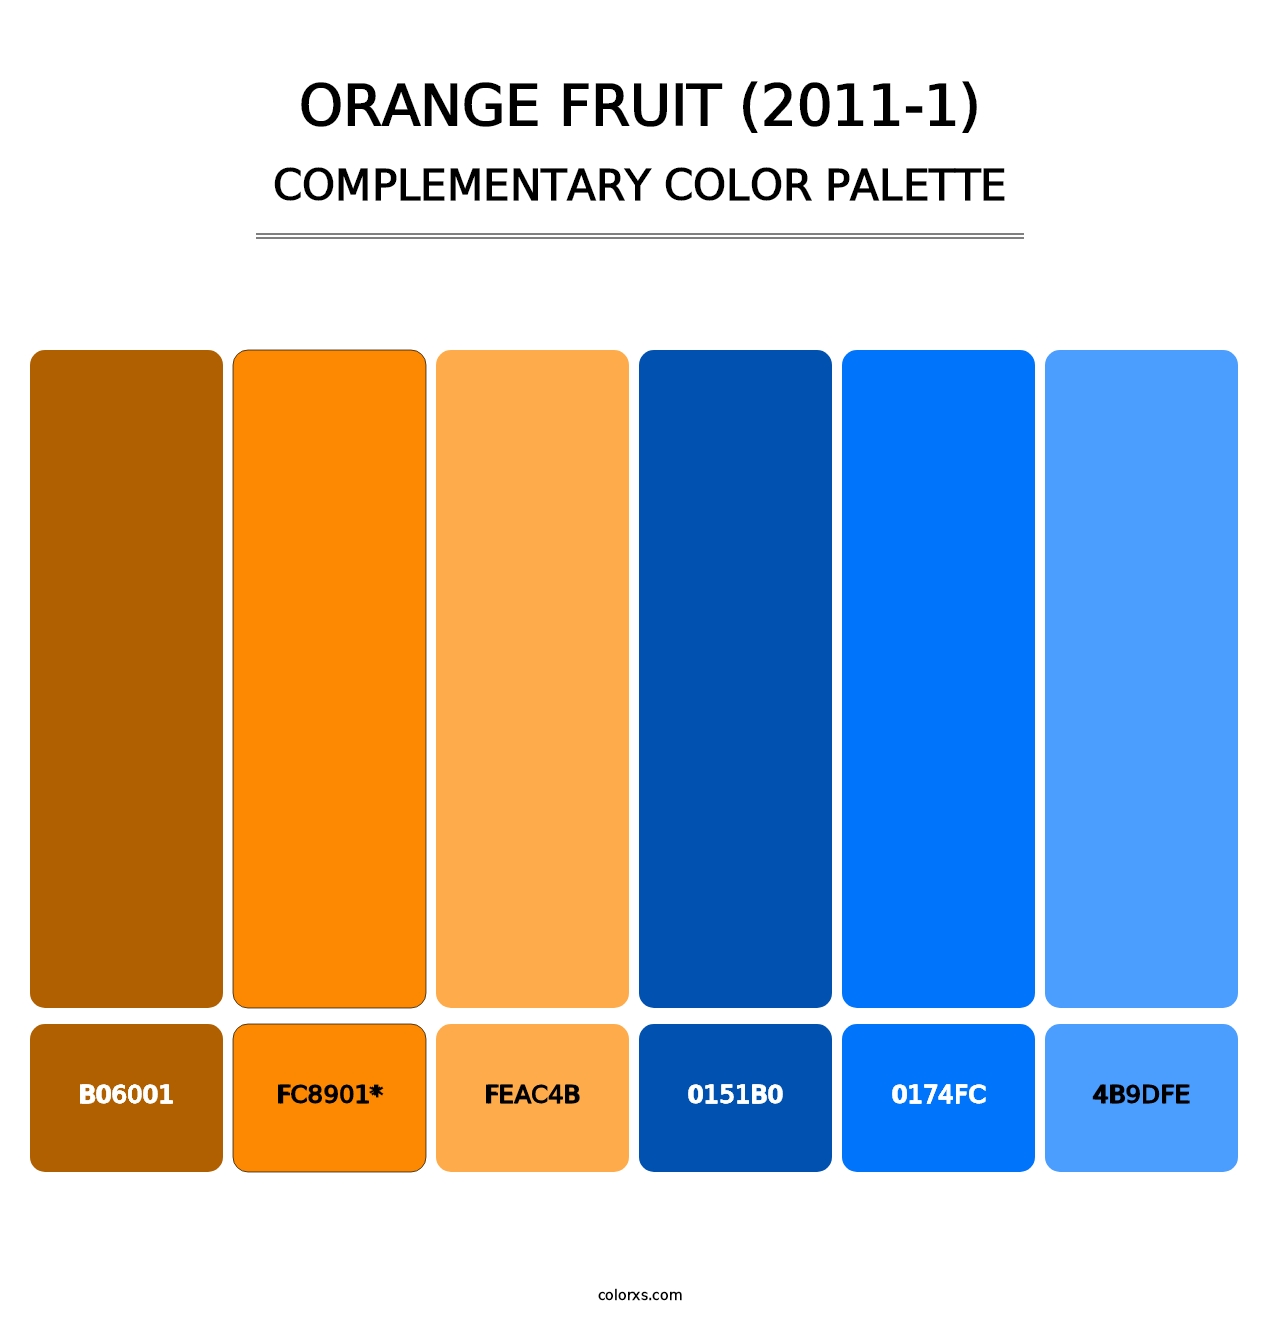 Orange Fruit (2011-1) - Complementary Color Palette